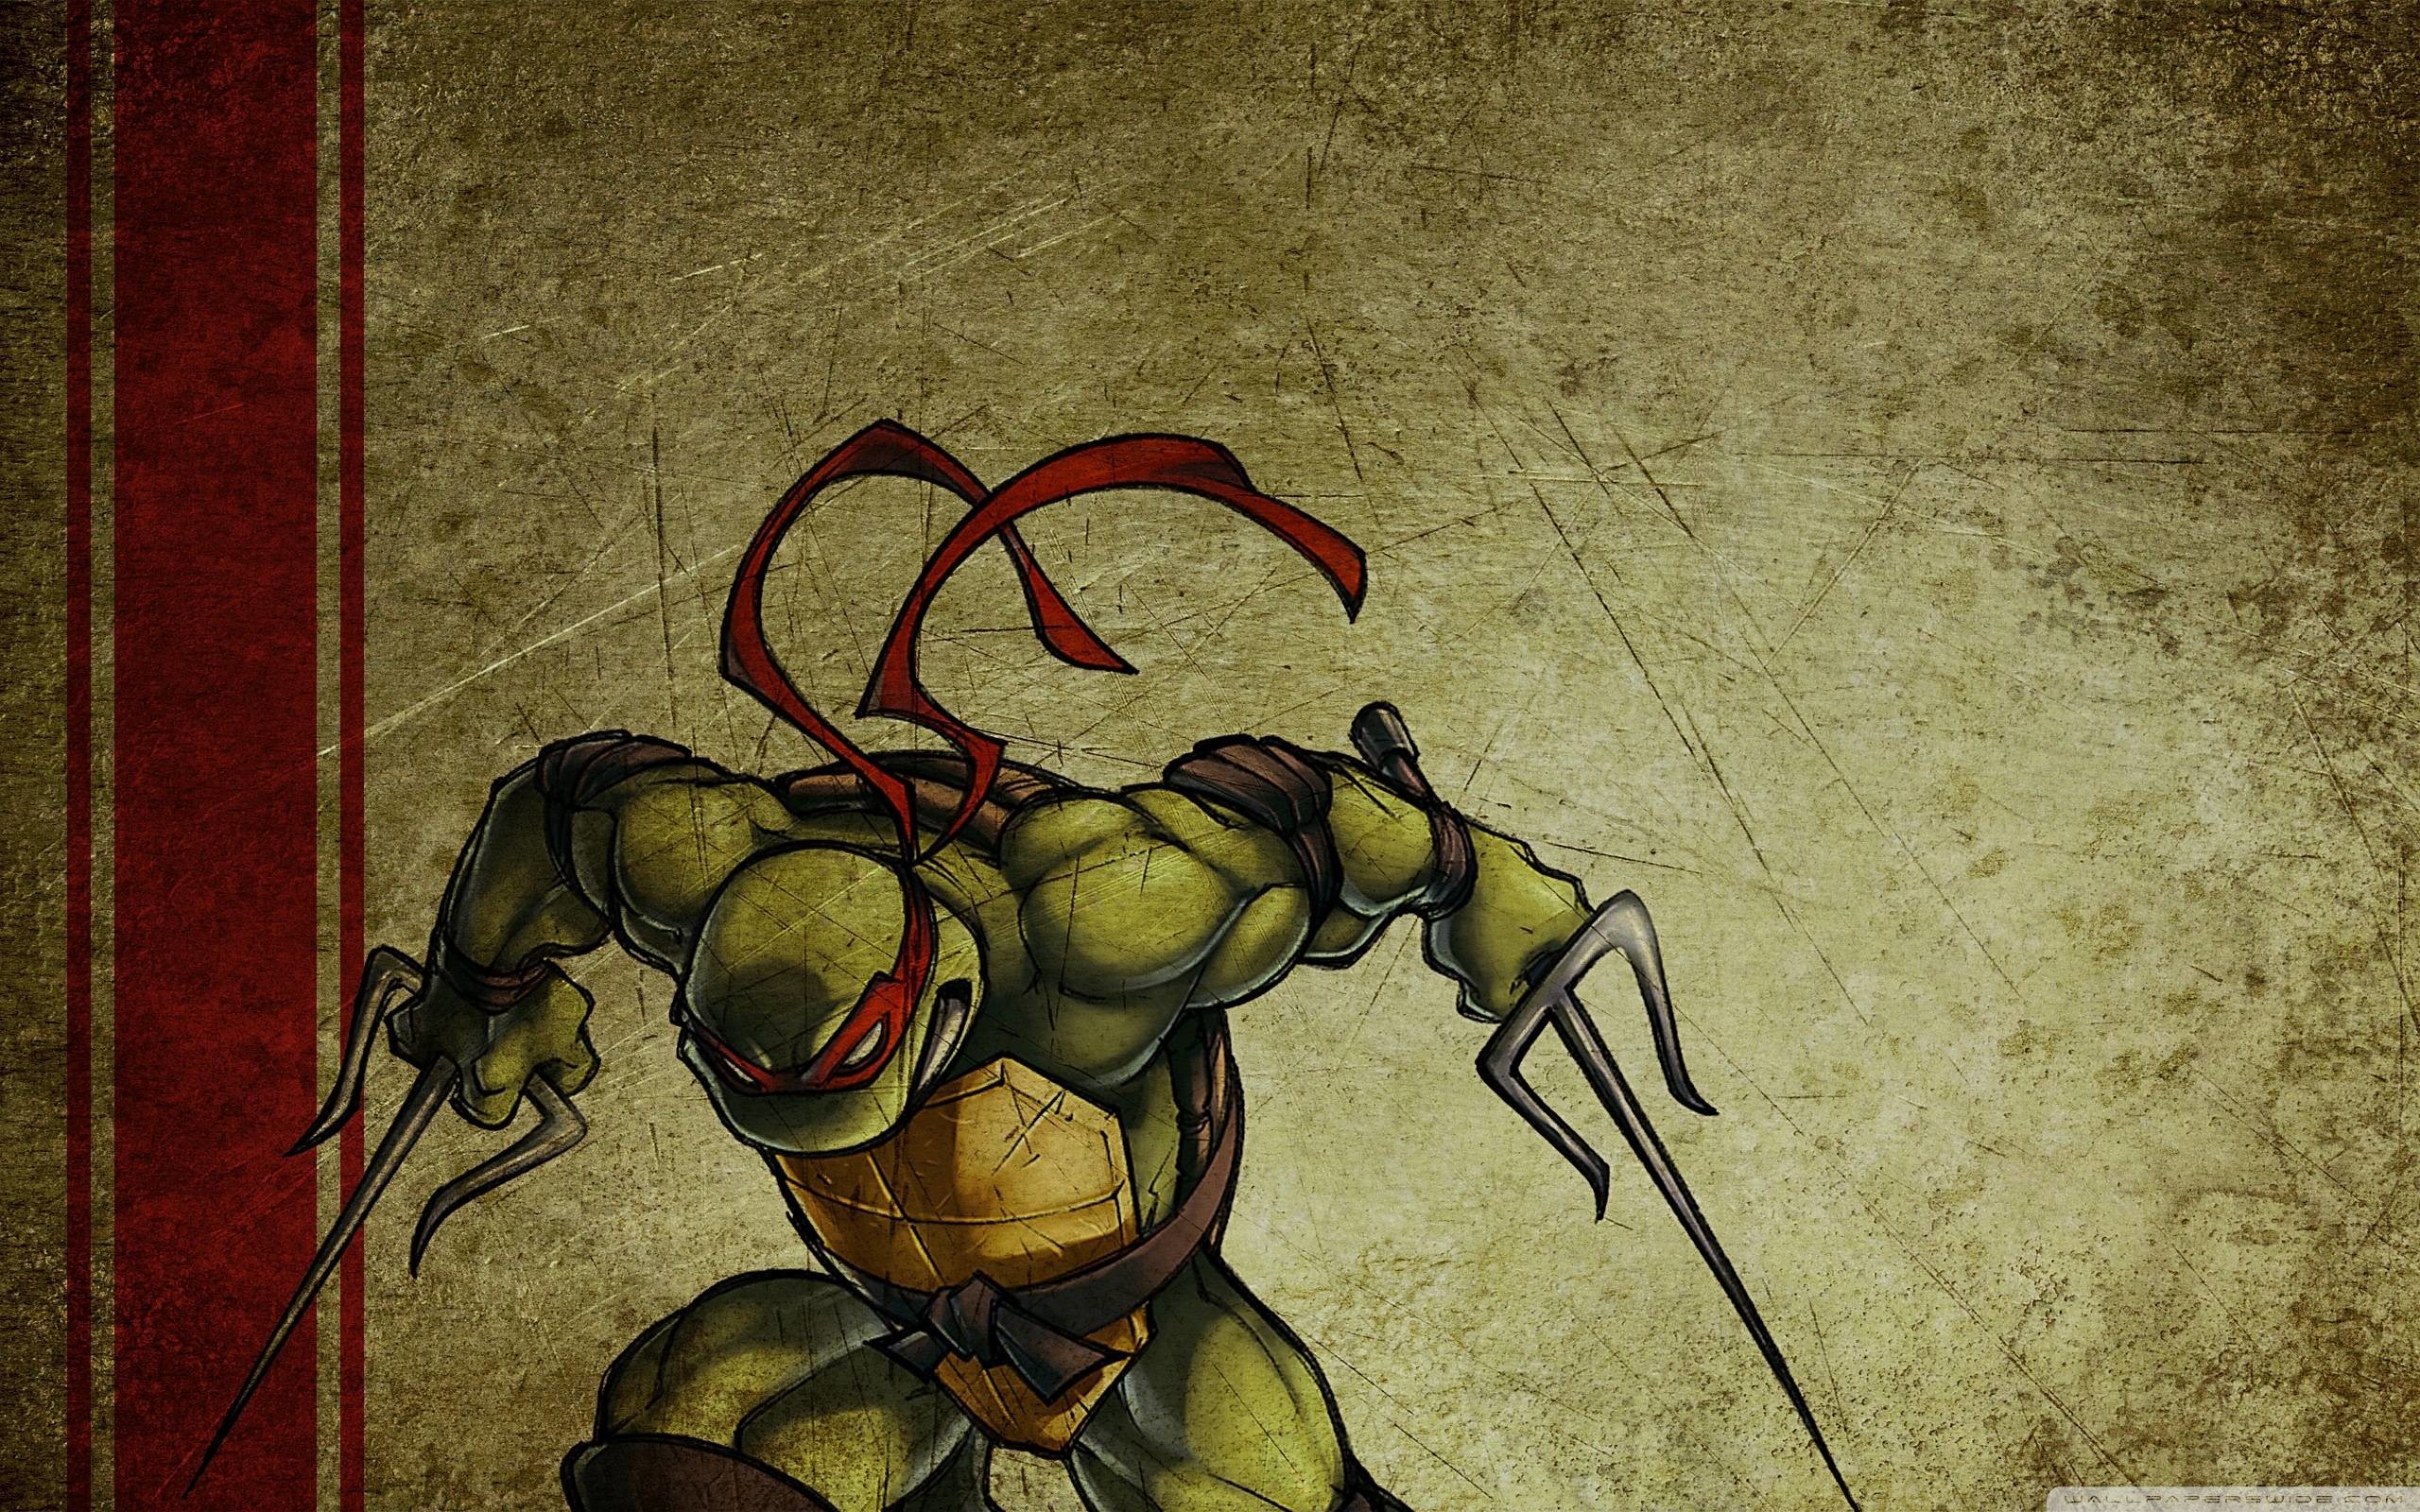 Leonardo Ninja Turtle 4k Wallpaper,HD Superheroes Wallpapers,4k